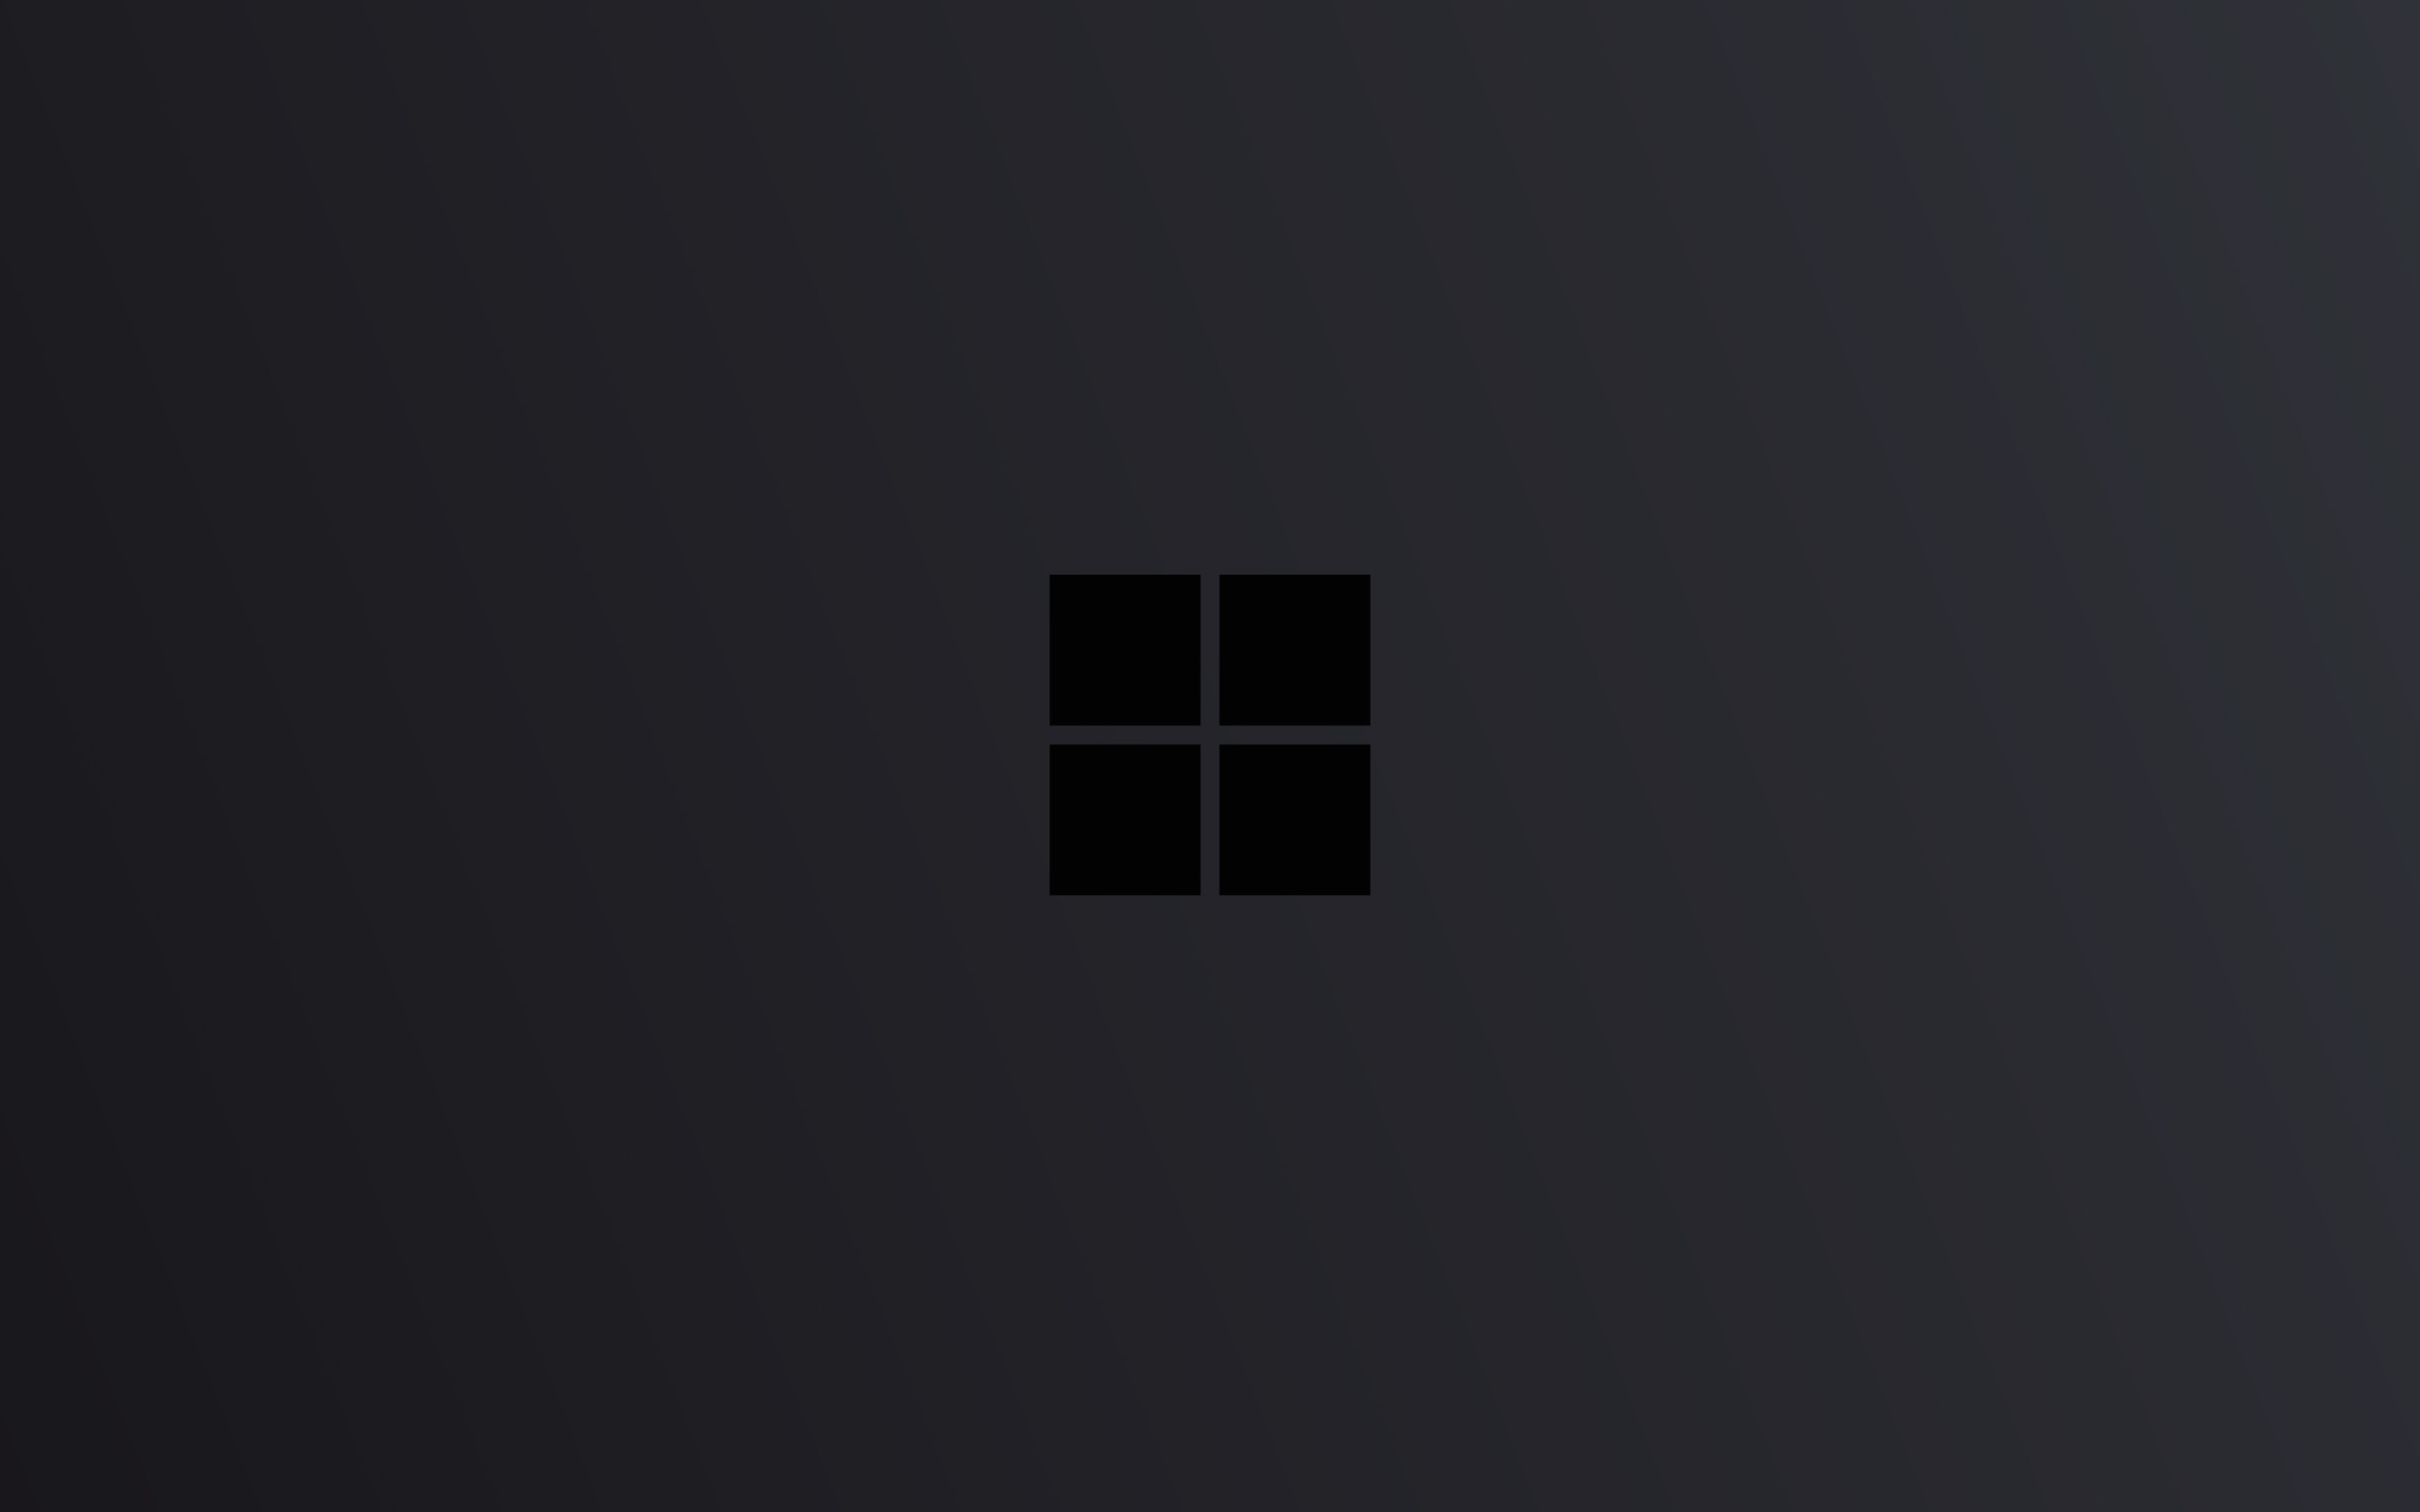 Microsoft Windows 10 - Default Wallpaper (BLACK) by CodeFormer on DeviantArt